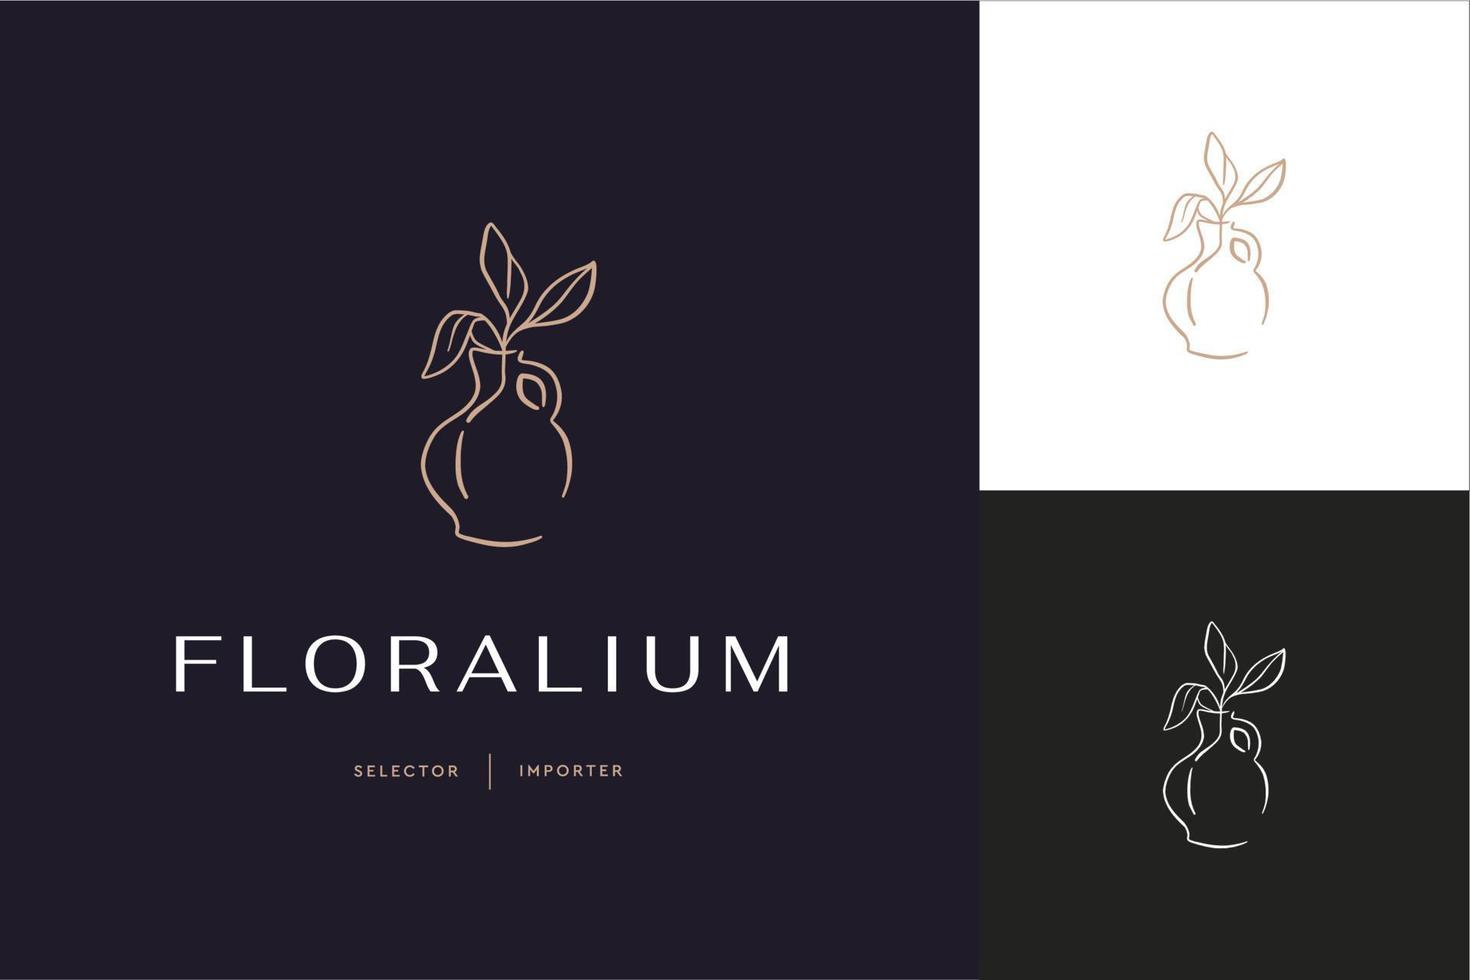 modelo de design de logotipo abstrato vetorial em estilo minimalista linear moderno - flor em vaso - símbolo abstrato para cosméticos e embalagens, joias, produtos artesanais ou de beleza vetor